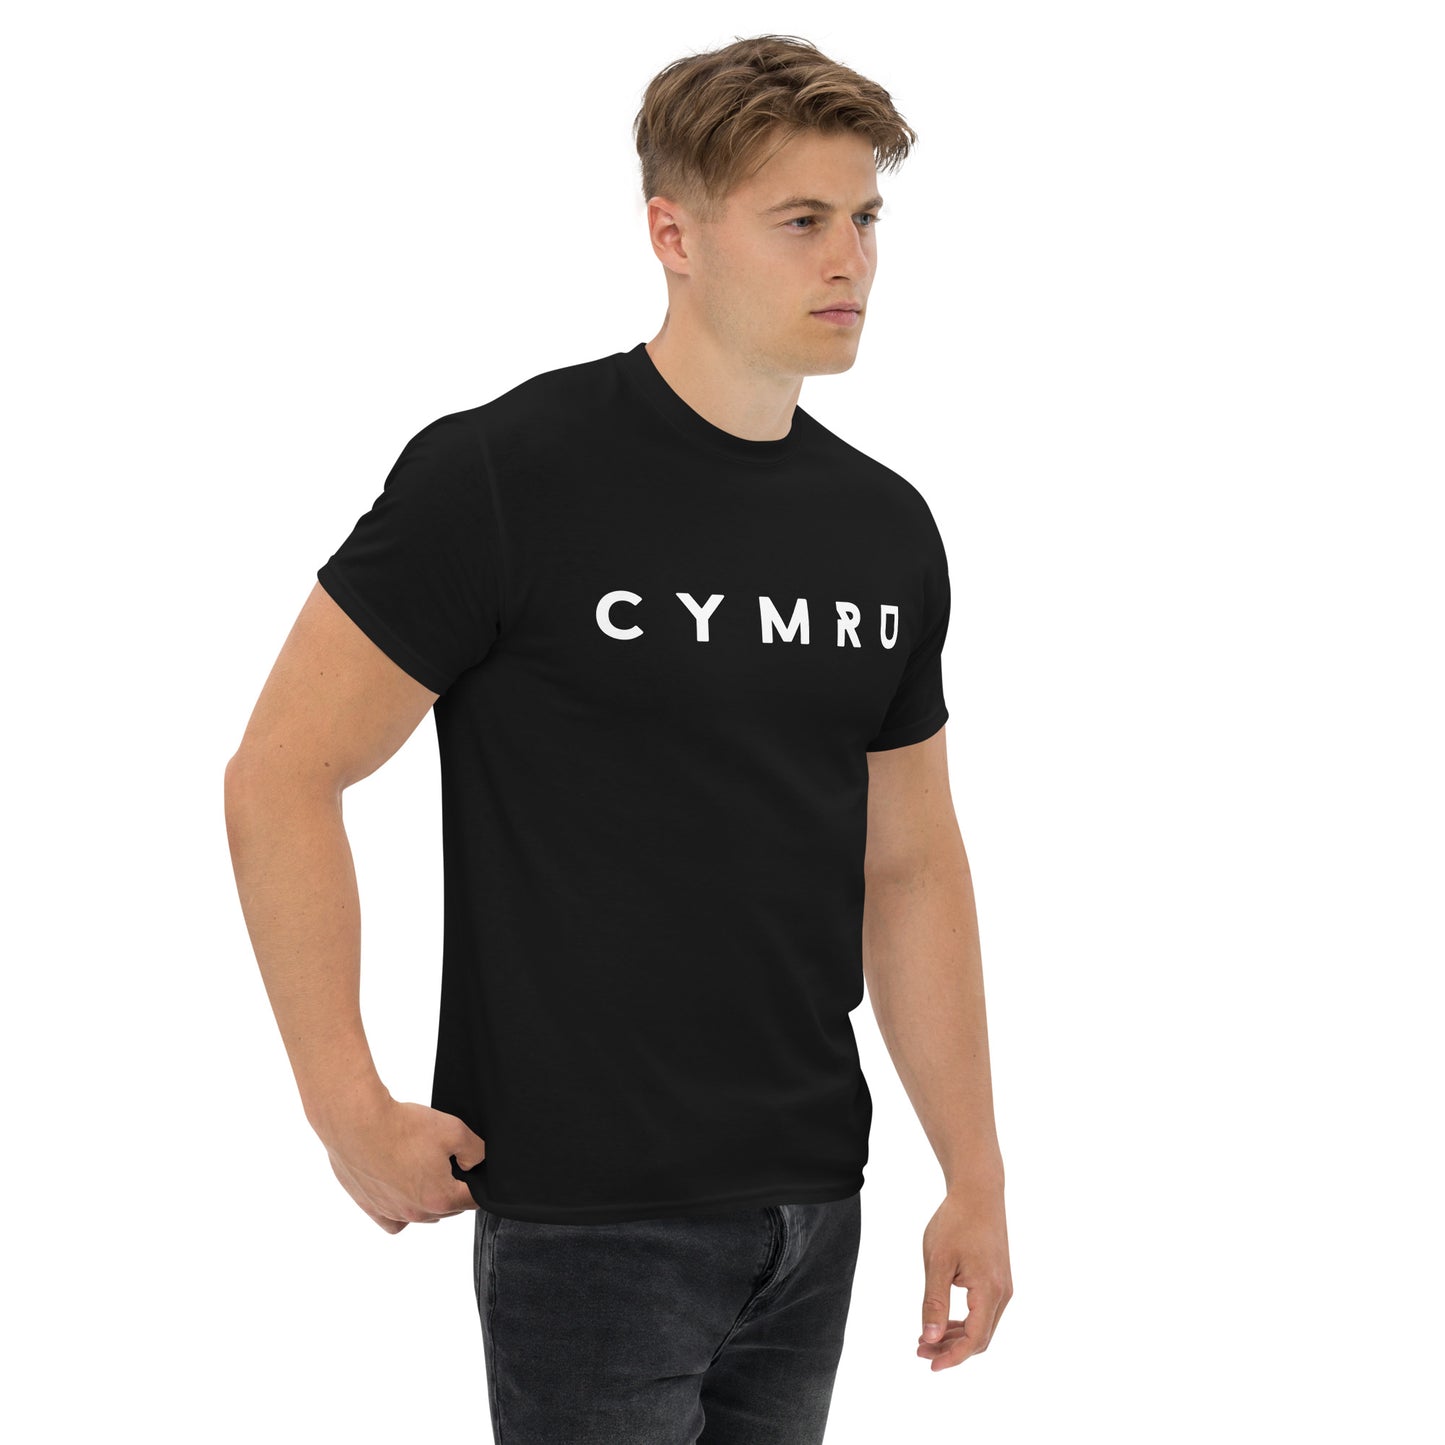 Cymru - Men's classic tee